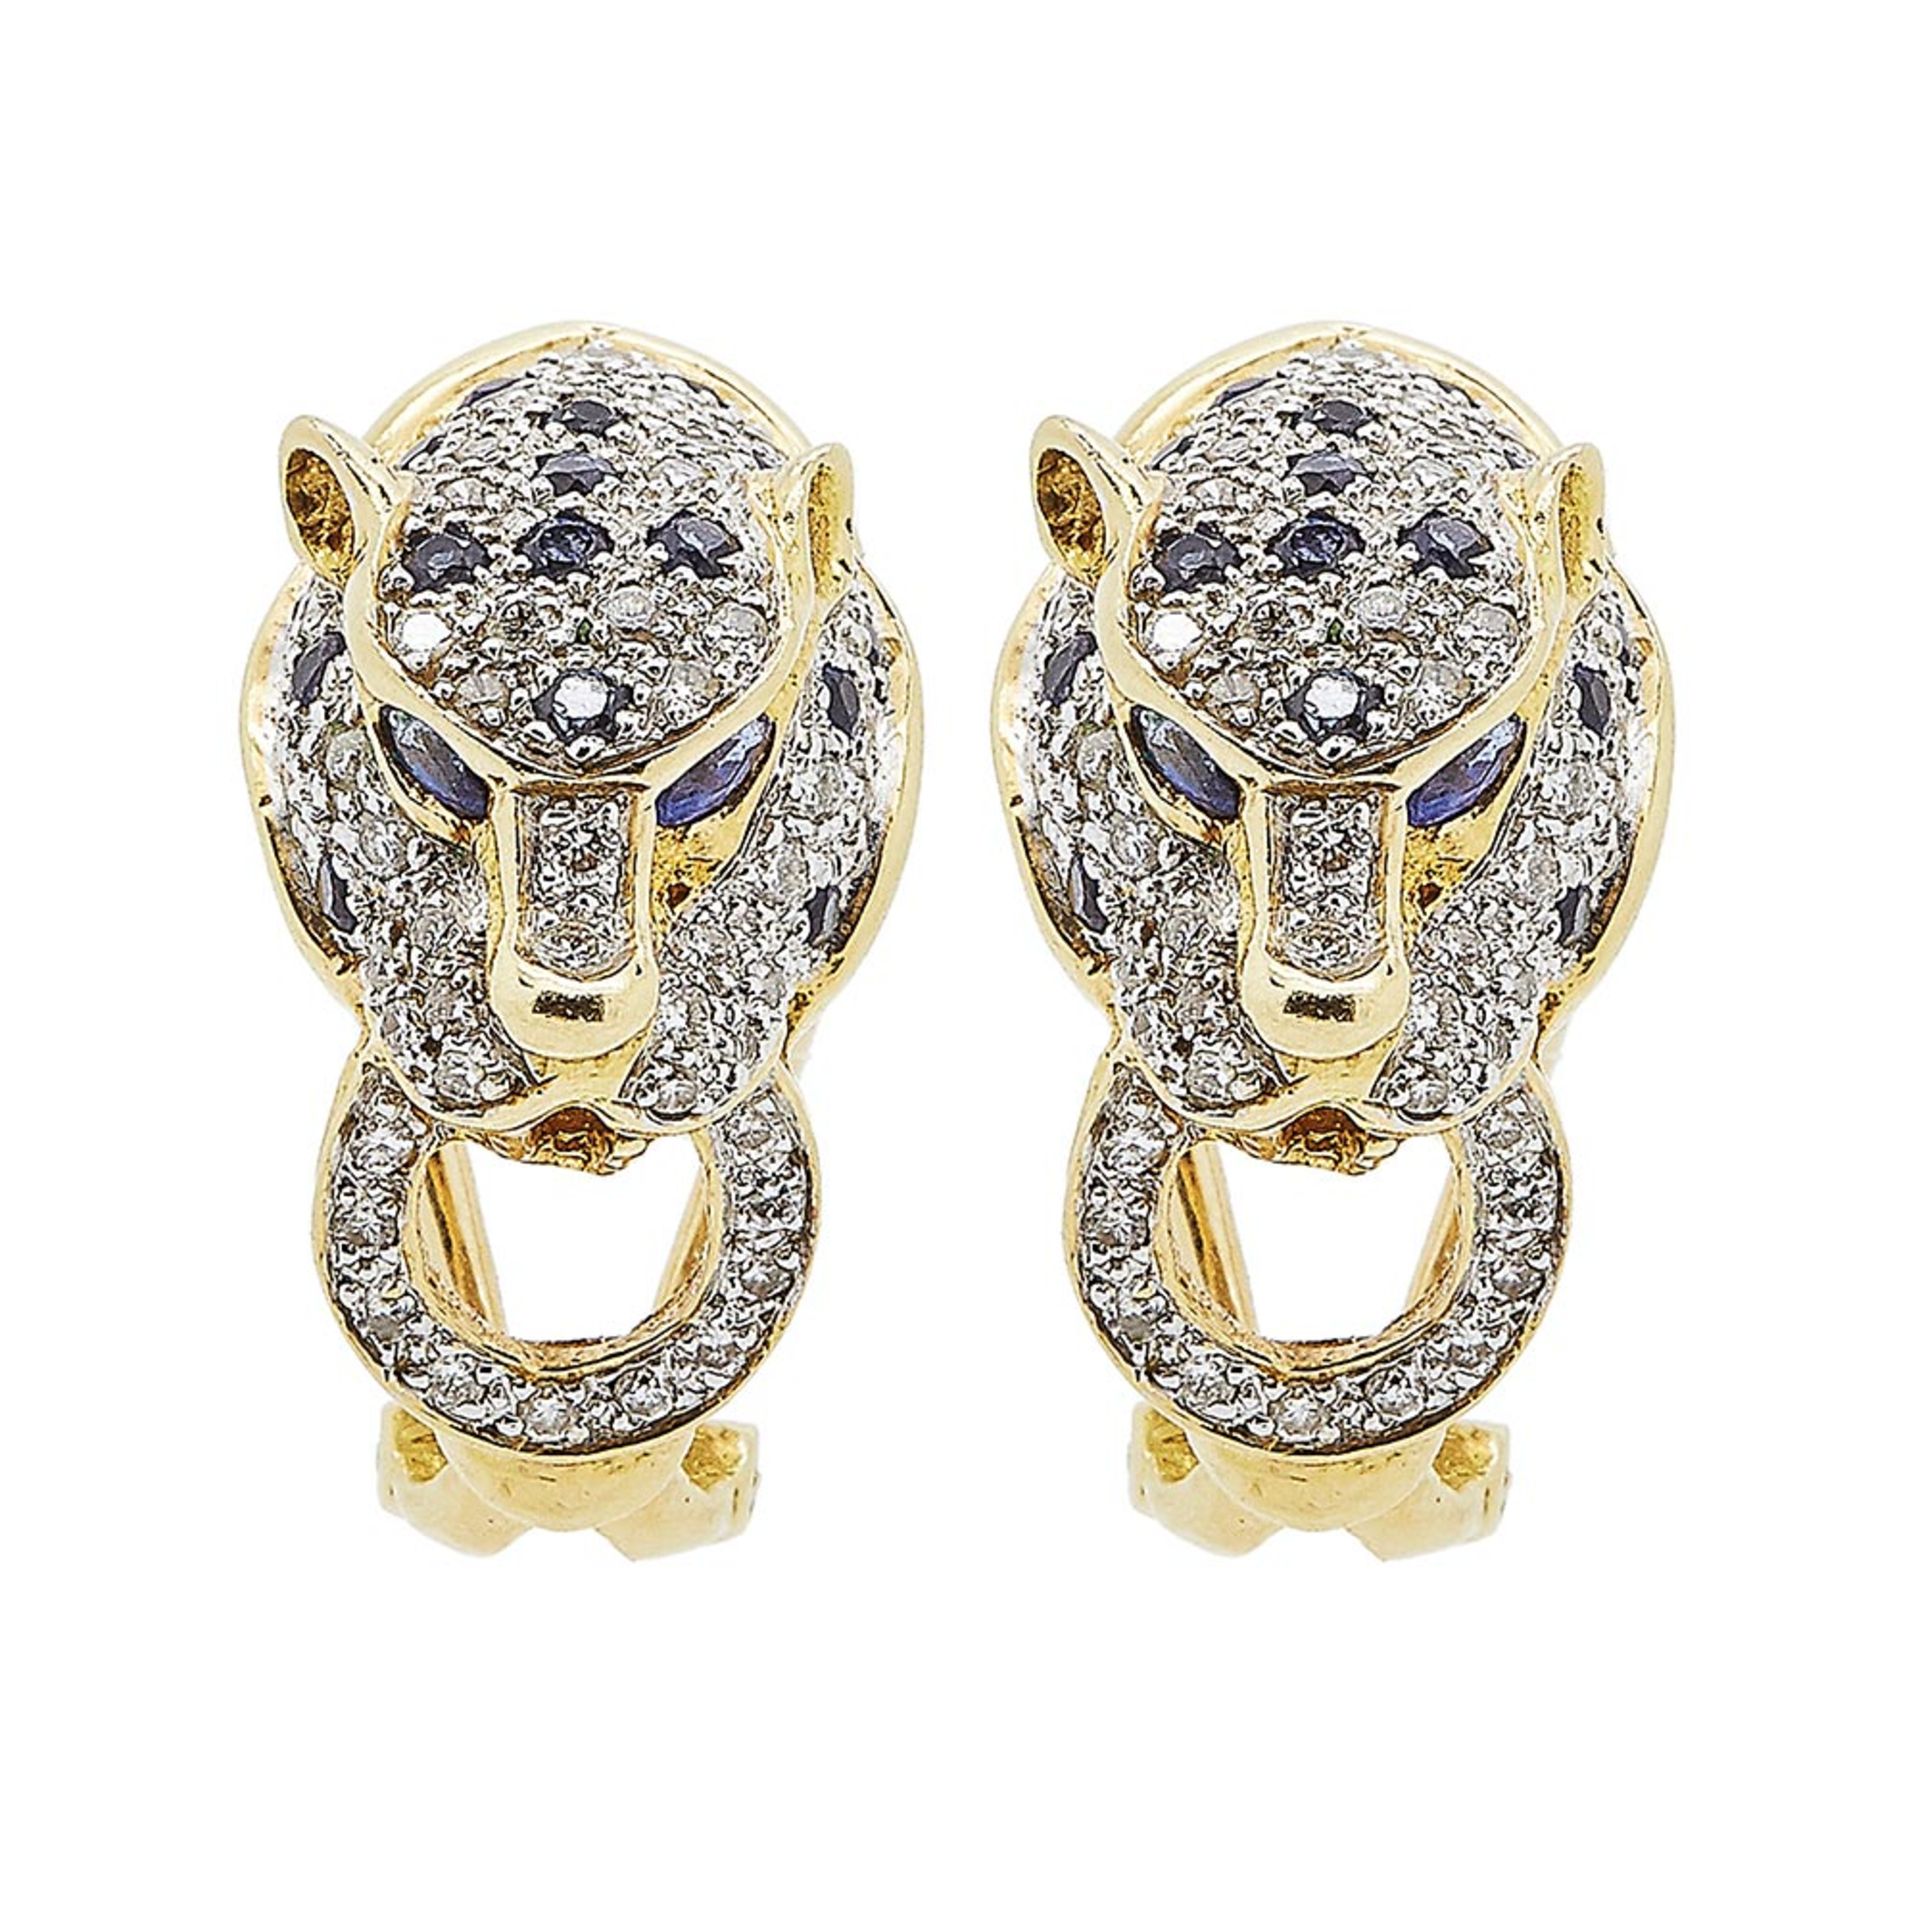 Pendientes diseño pantera en oro con diamantes talla brillante y zafiros azules talla redonda.